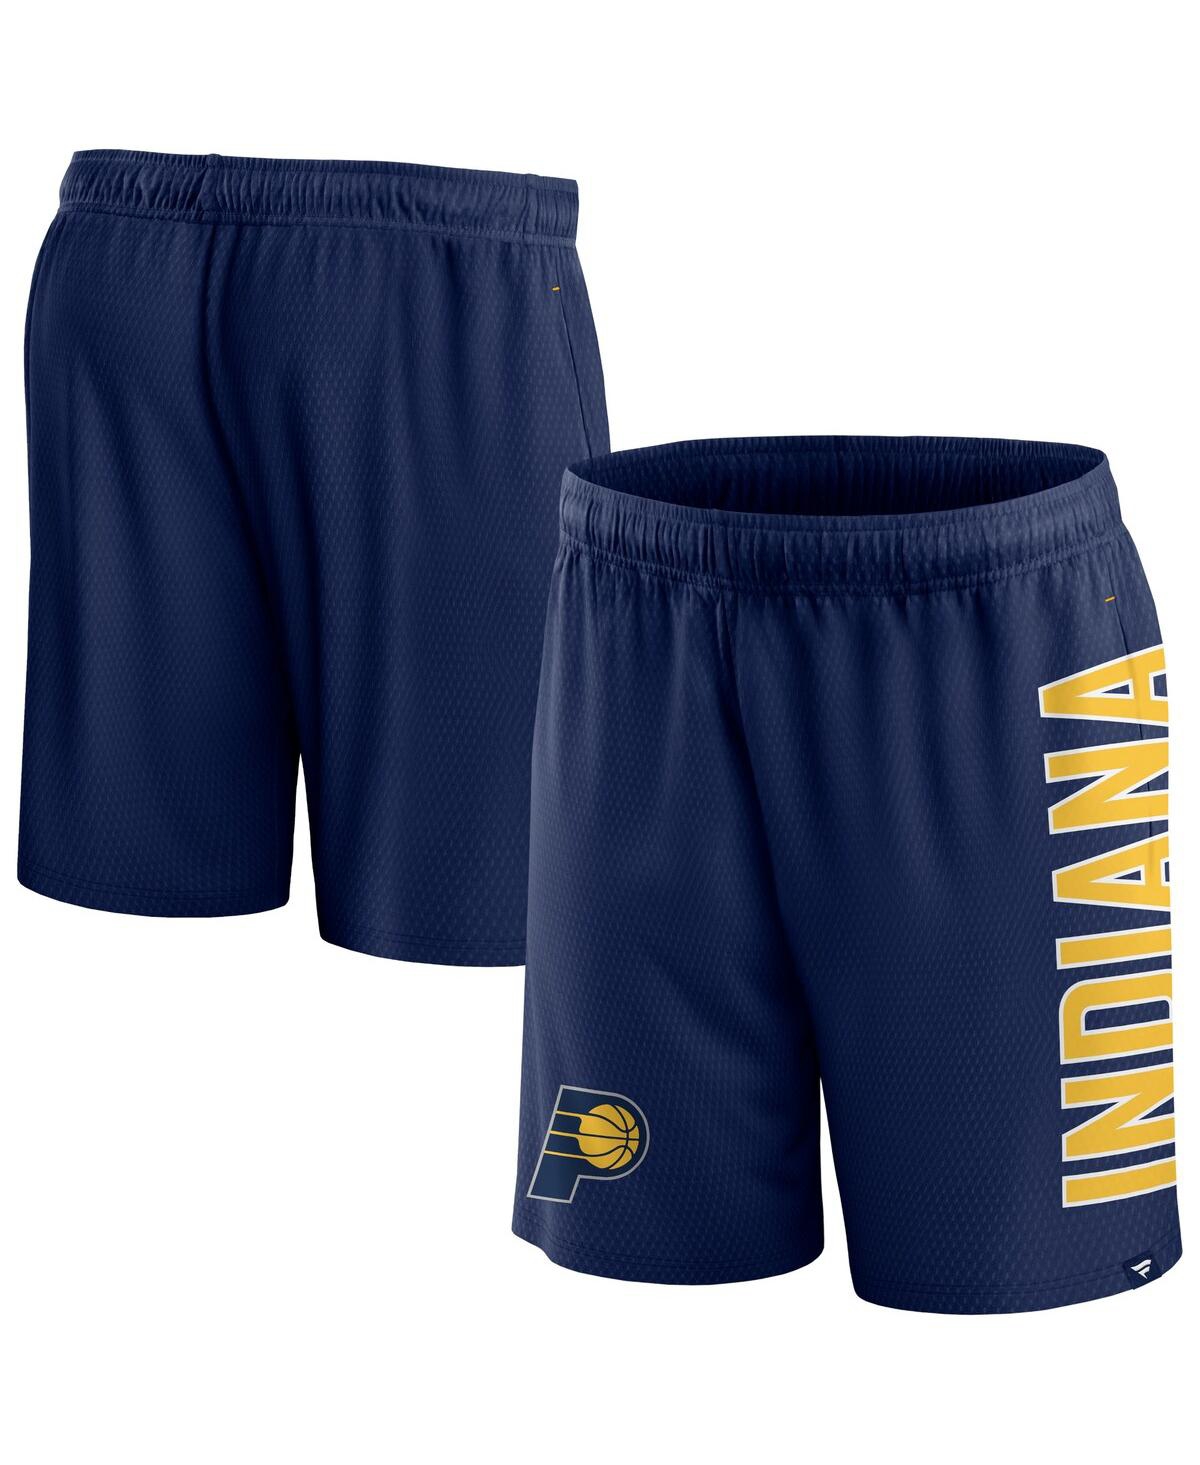 Shop Fanatics Men's  Navy Indiana Pacers Post Up Mesh Shorts